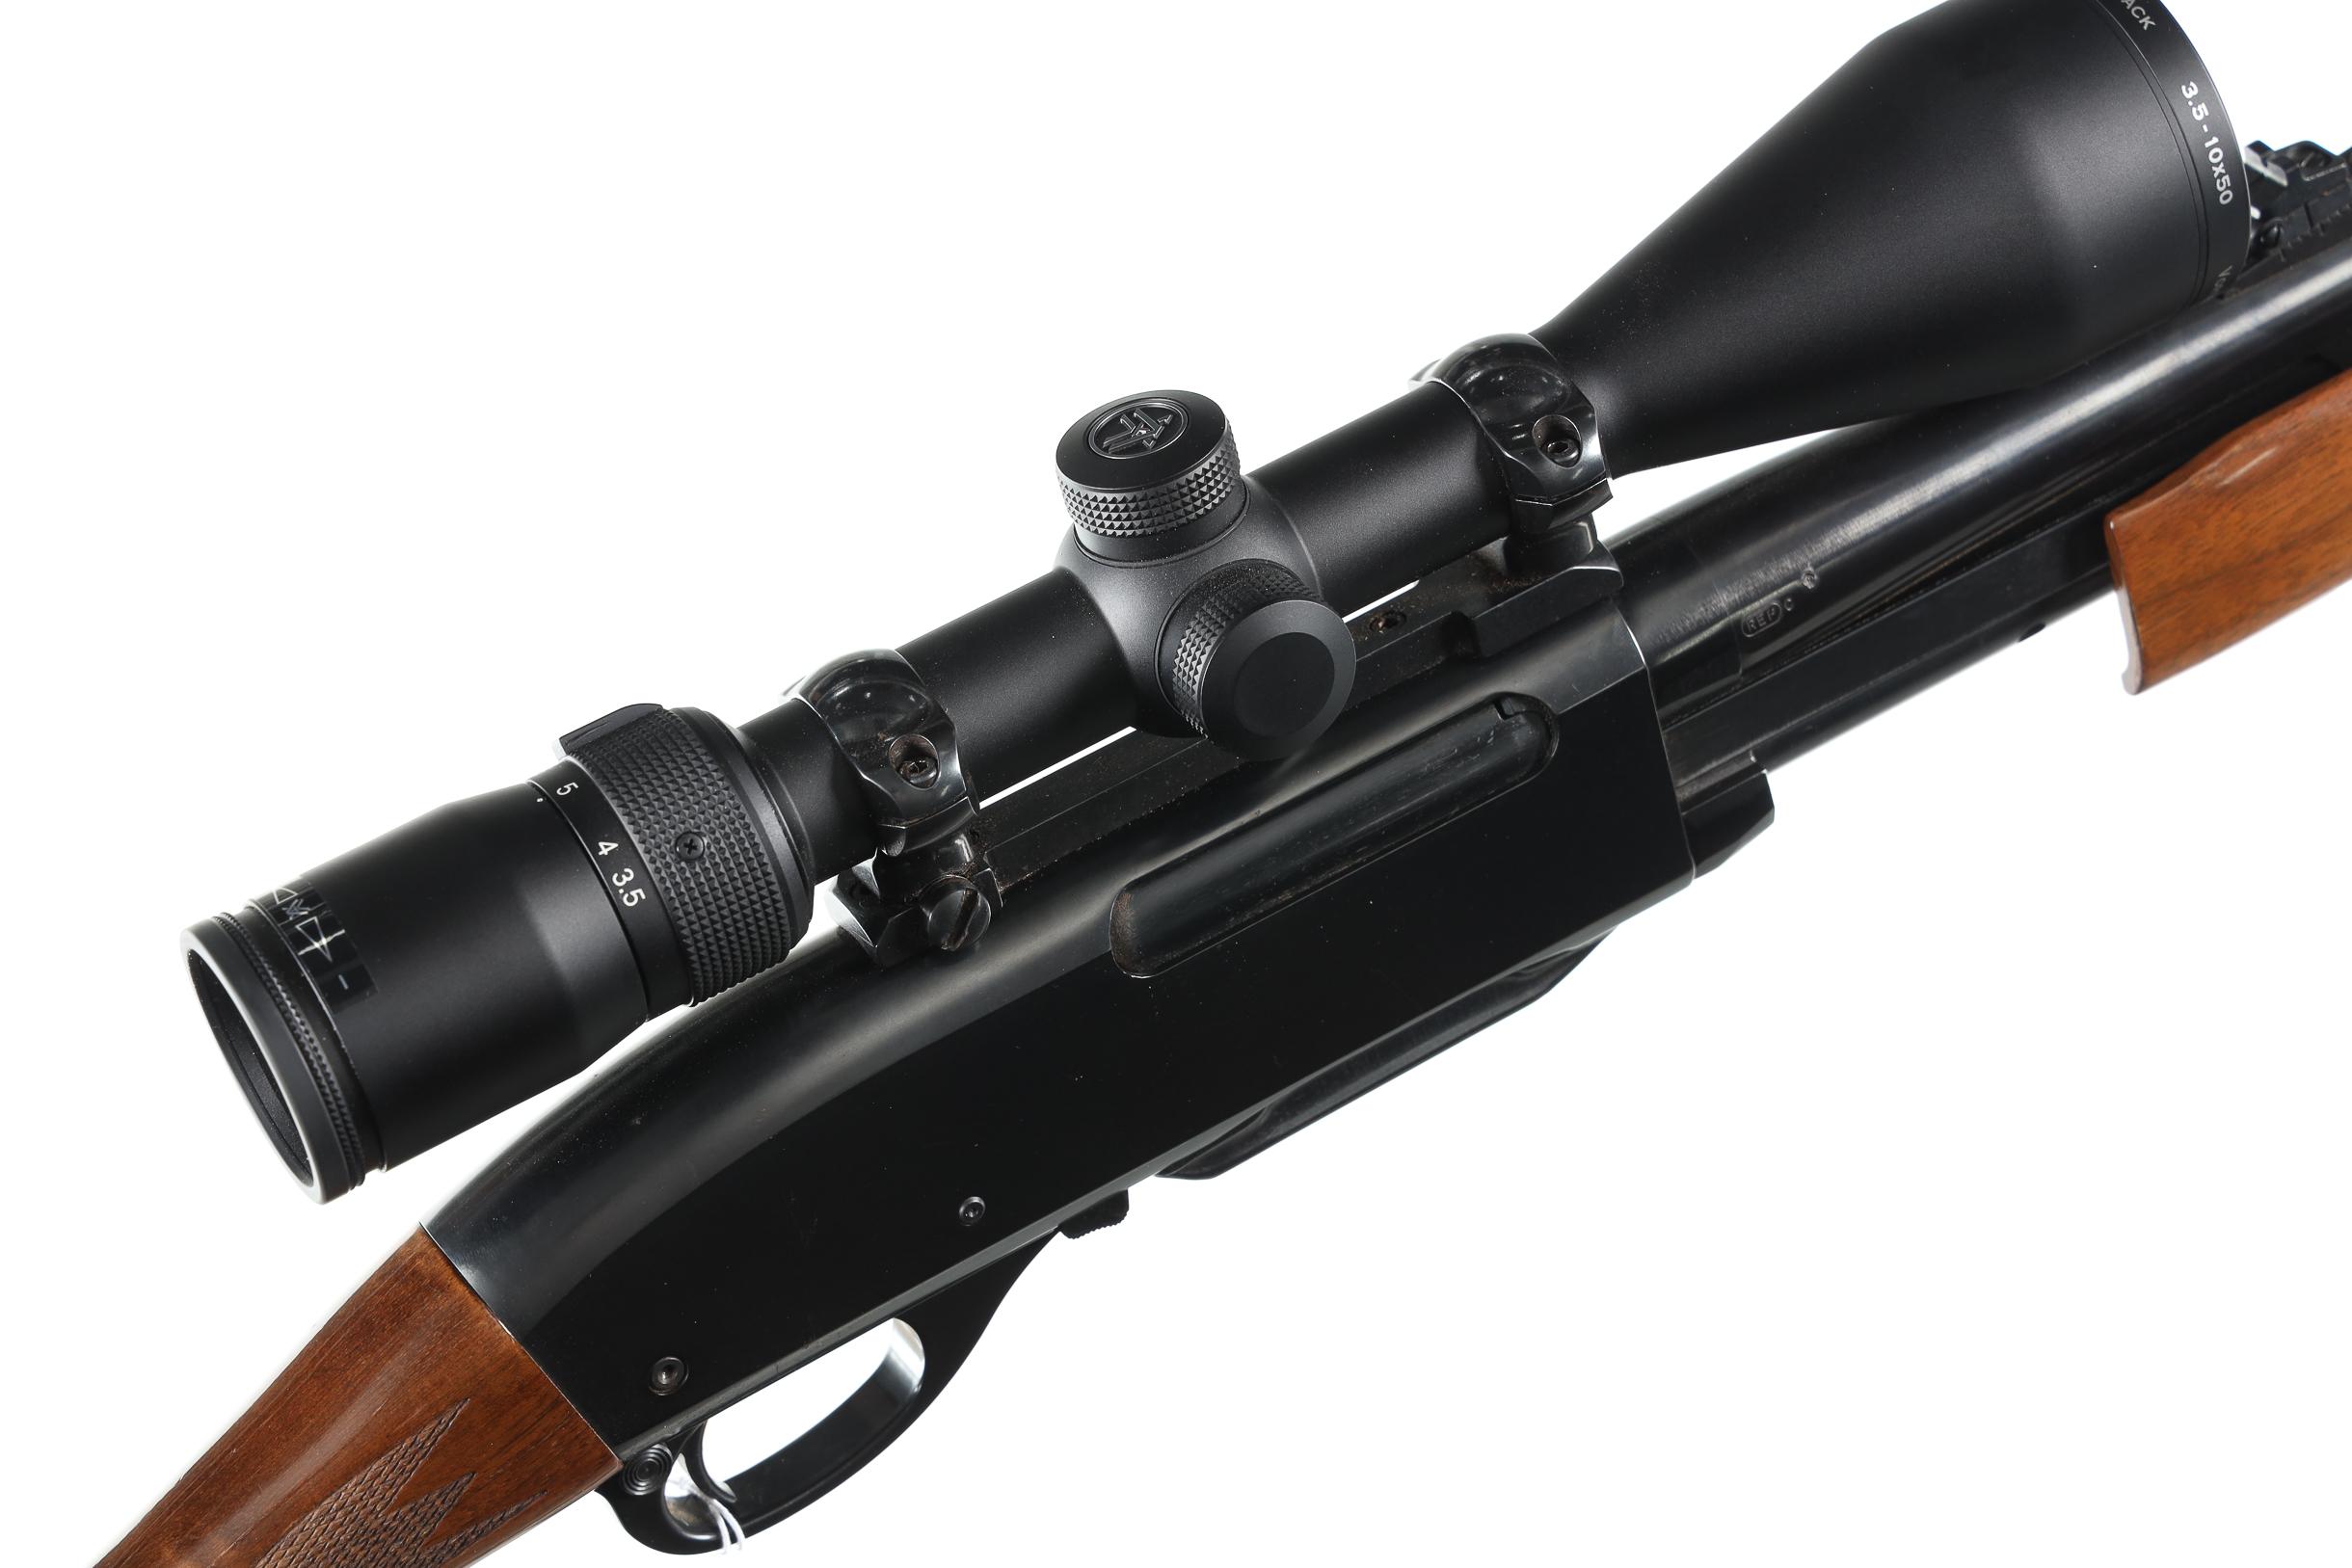 Remington 7600 Slide Rifle 7mm-08